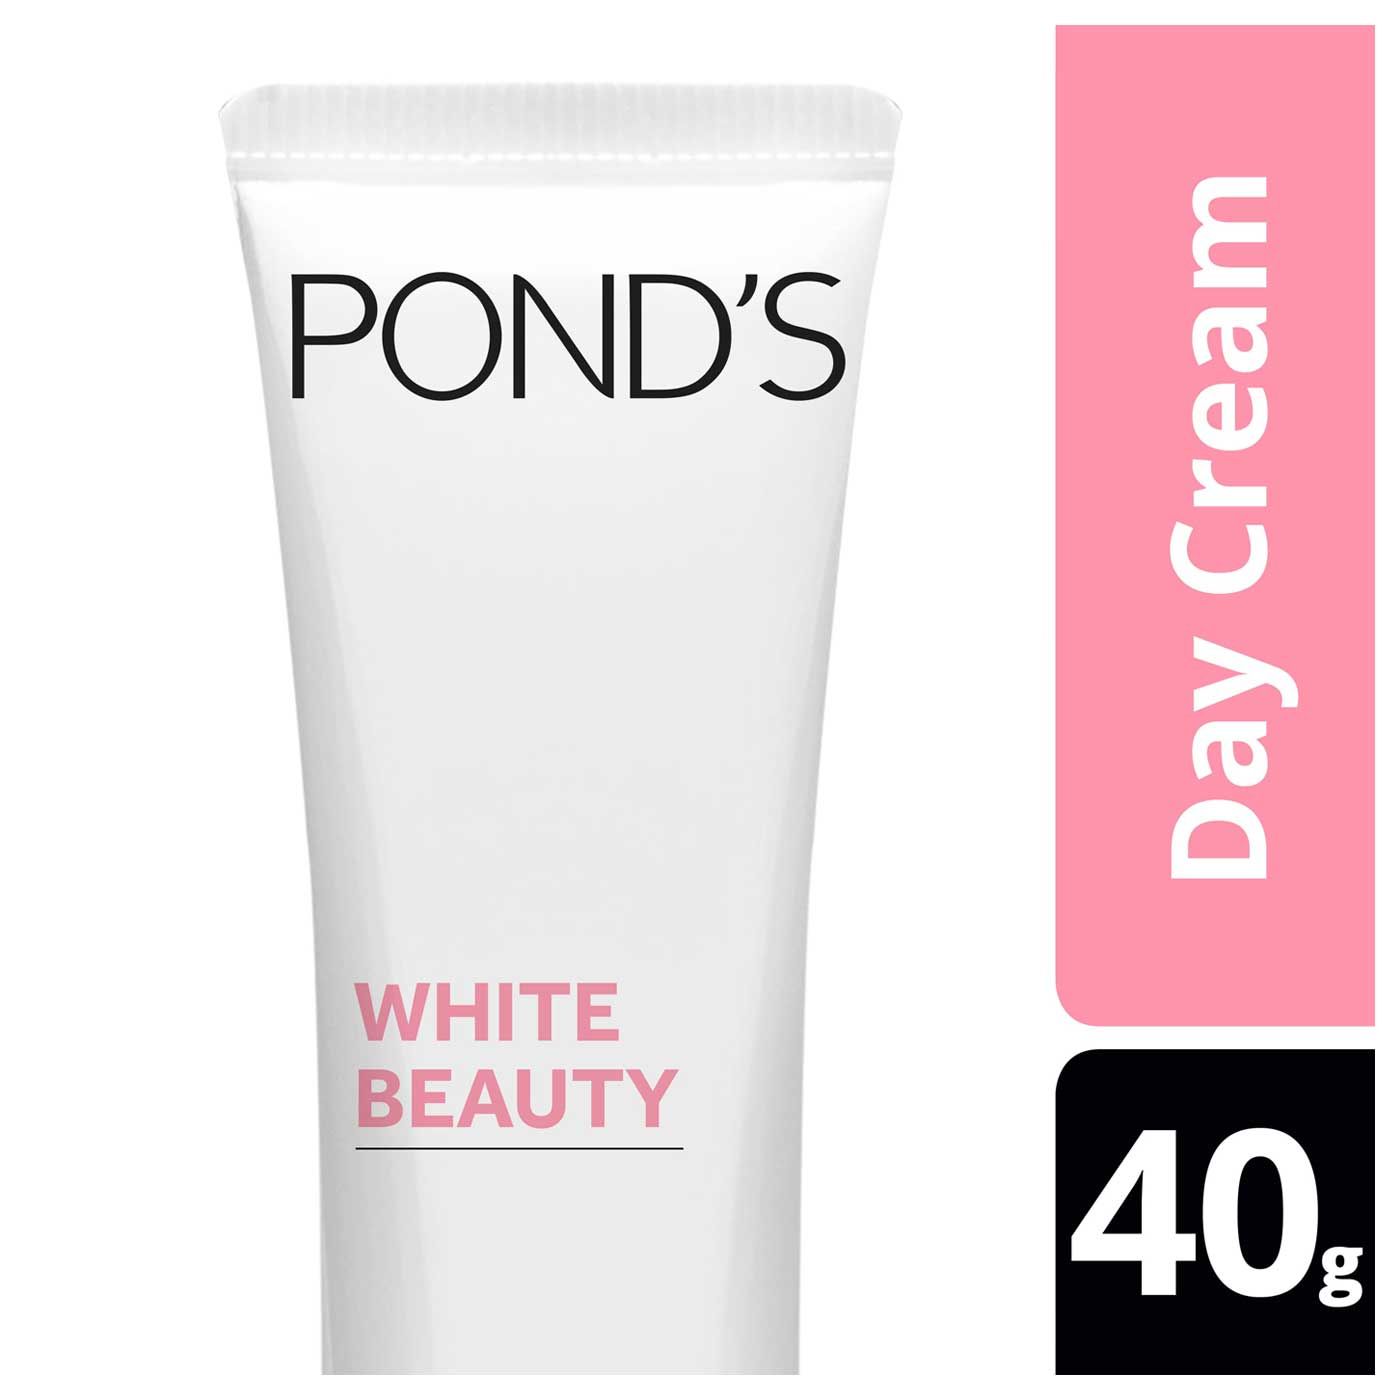 Pond'S White Beauty Krim Pencerah Untuk  Kulit Normal 40g - 1